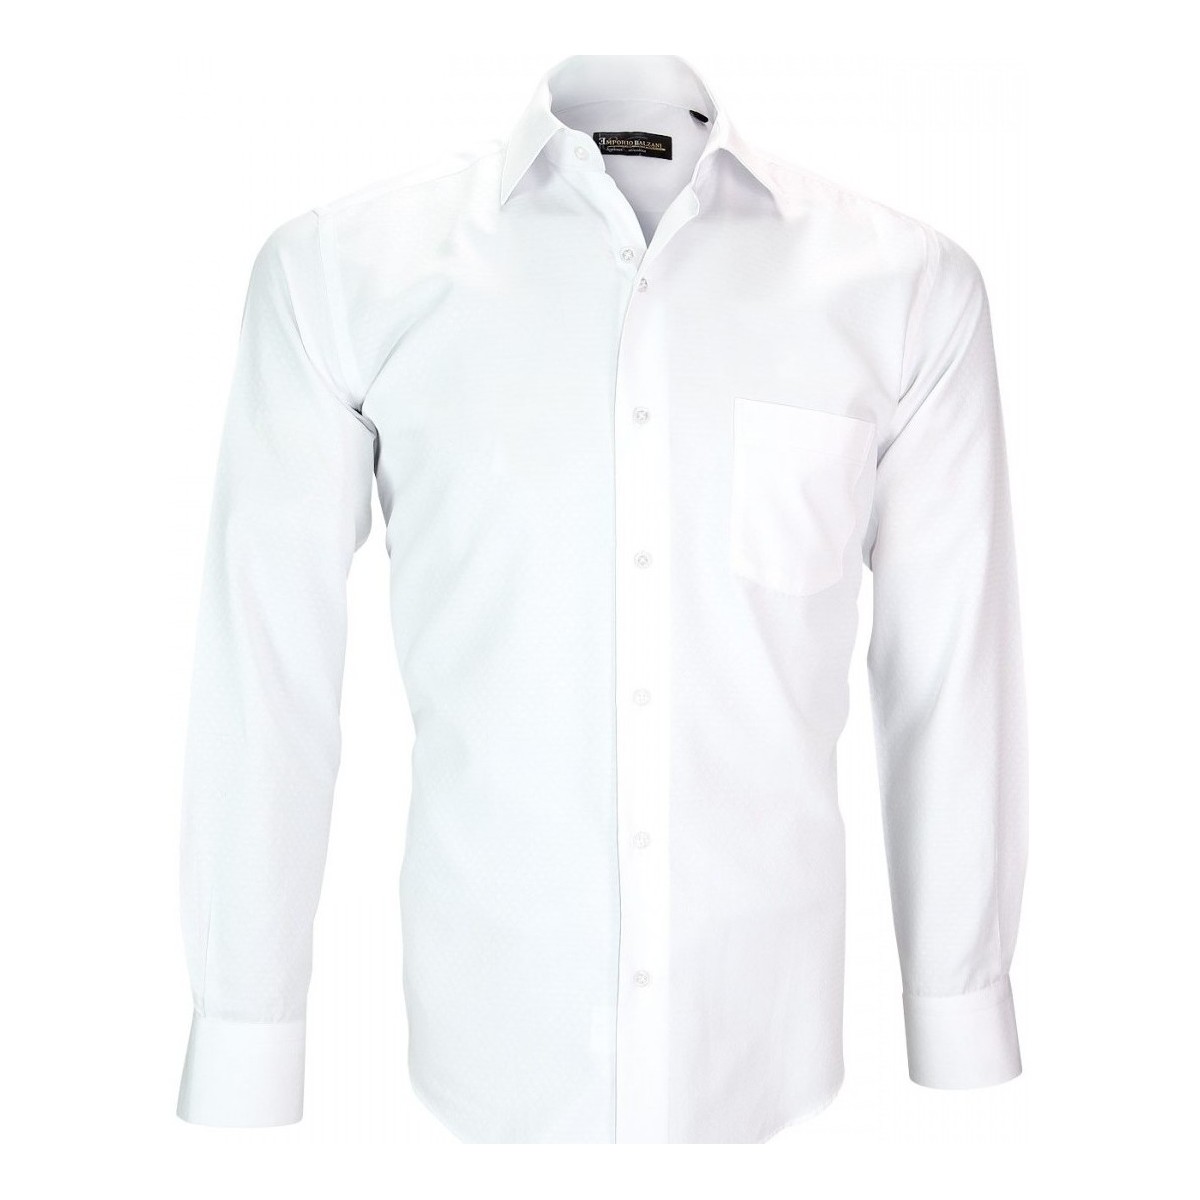 Vêtements Homme The Bagging Co chemise tissu jacquard syracuse blanc Blanc